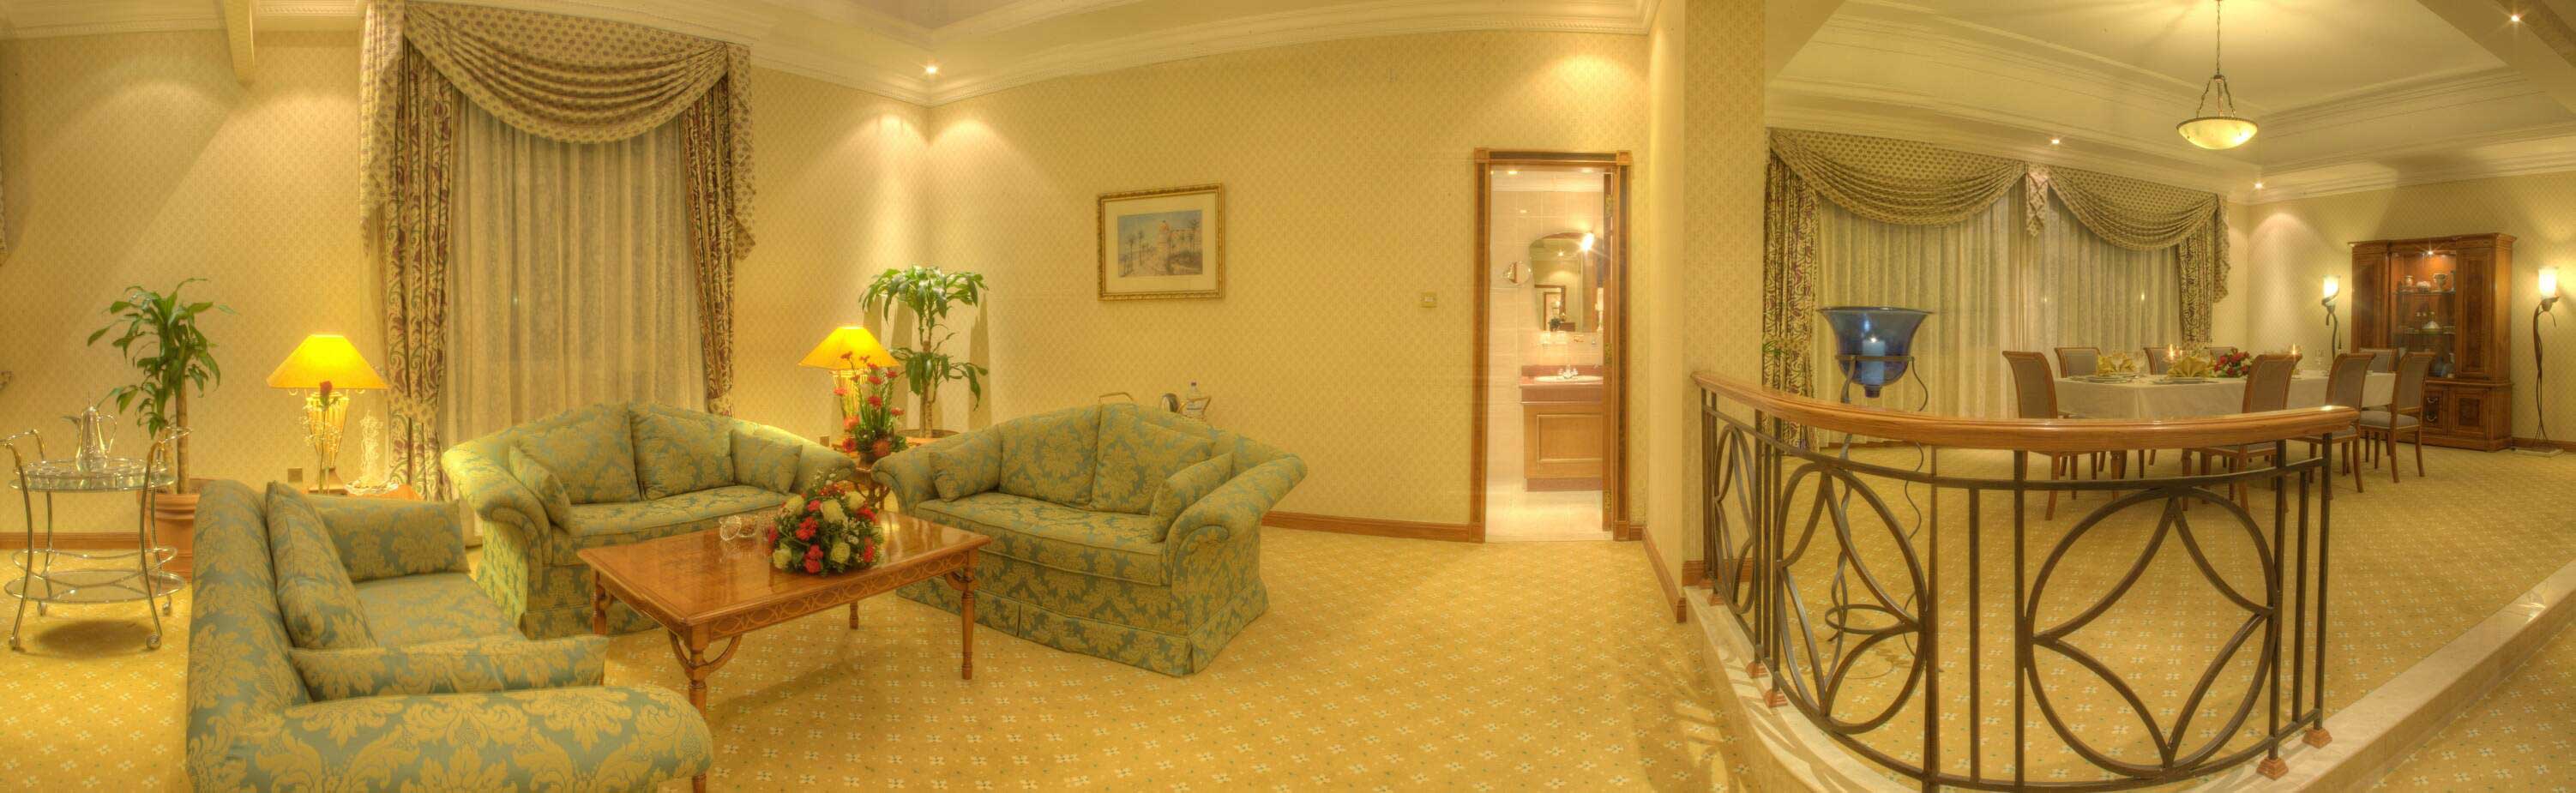 Al Diar Siji Hotel, Fujairah